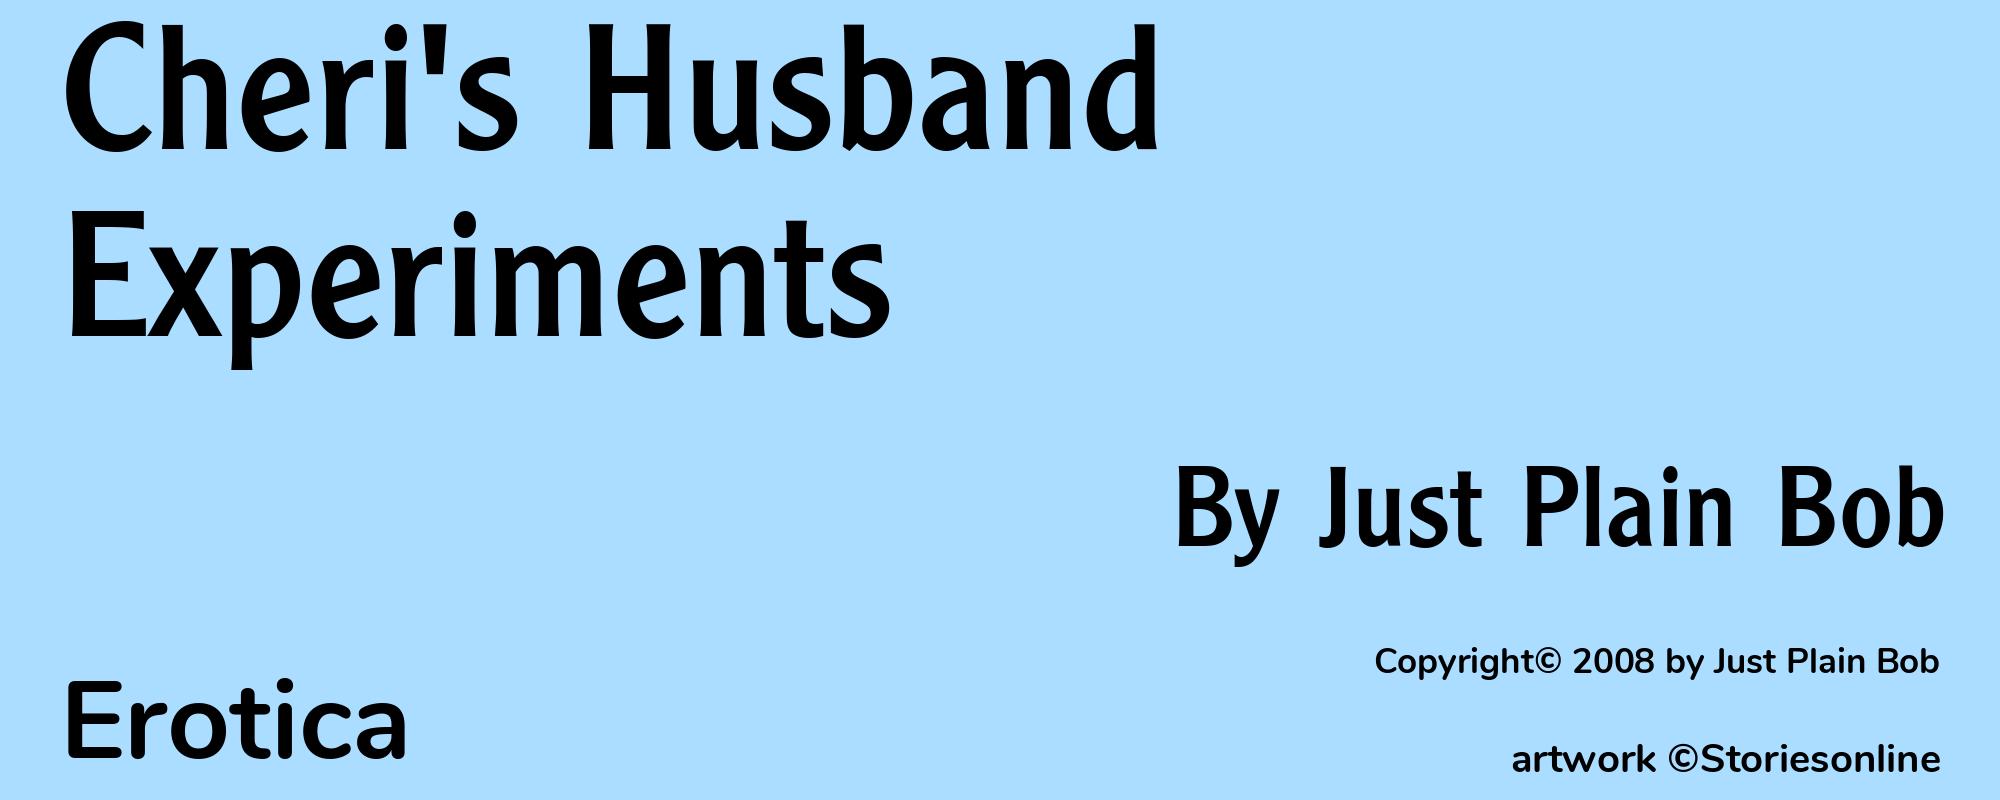 Cheri's Husband Experiments - Cover